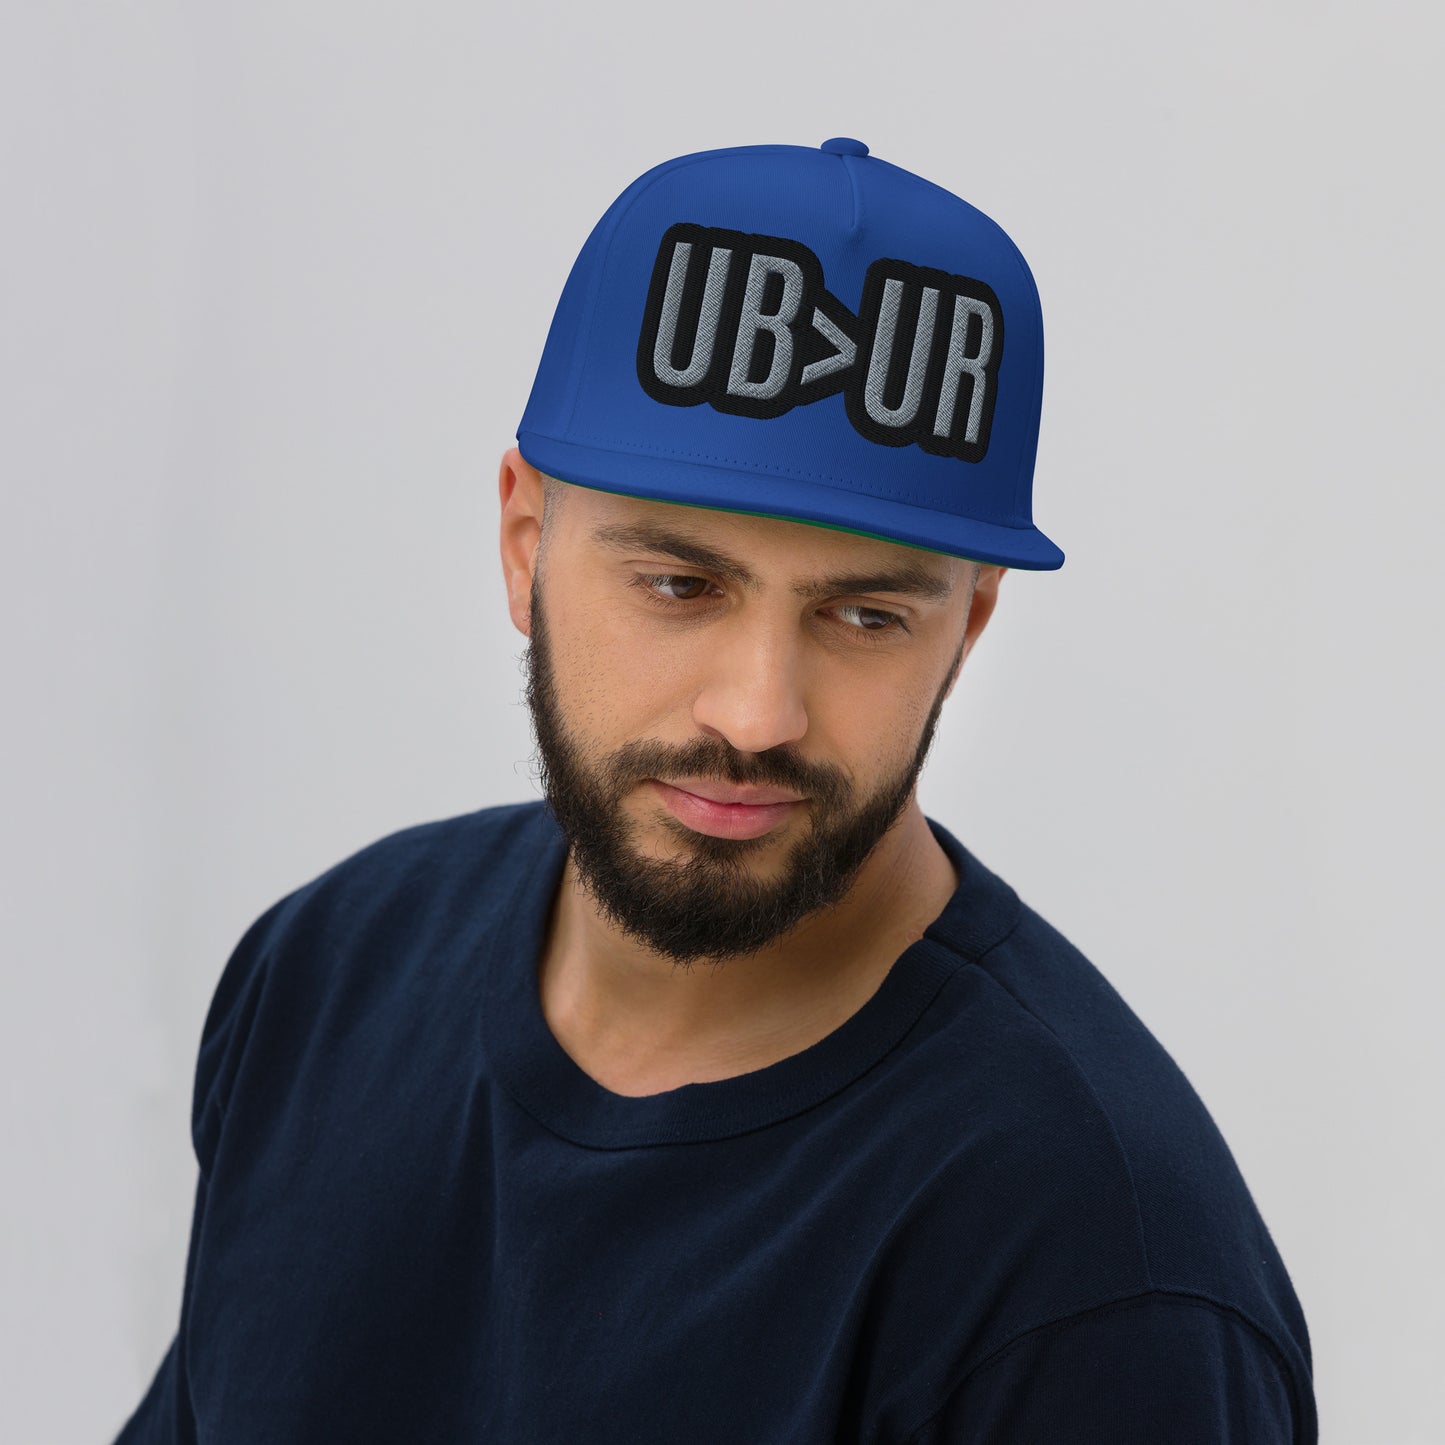 UB>UR-Flat Bill Cap with black n gray lettering